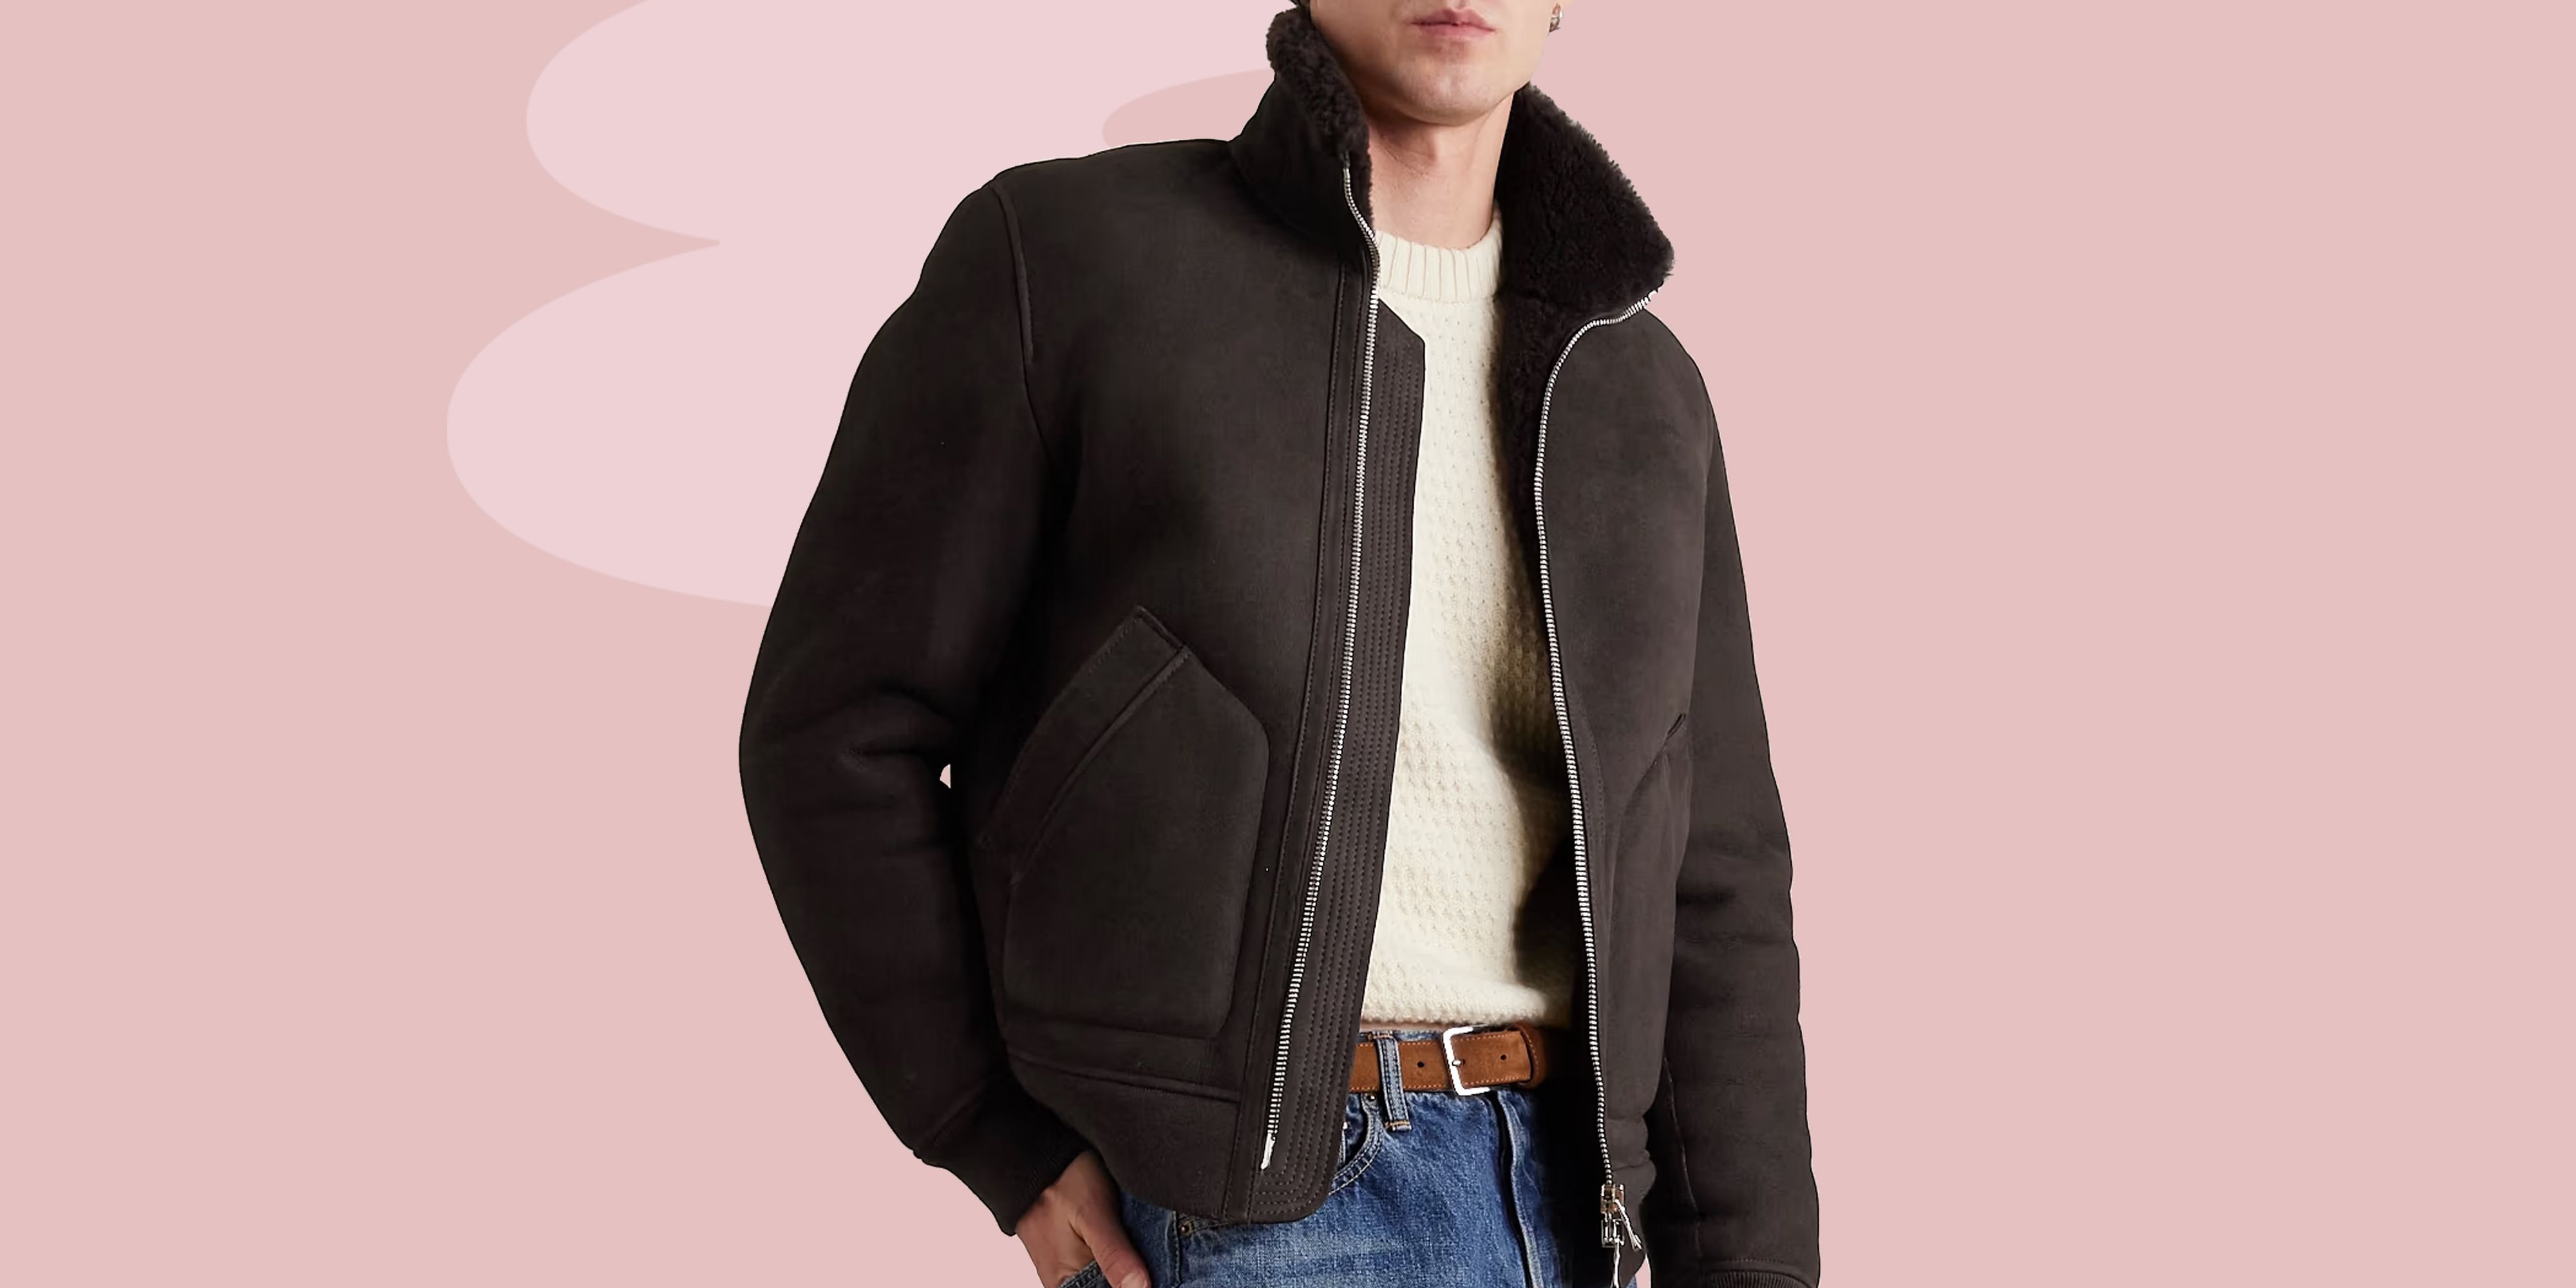 Sherpa Lined Denim Jacket – 3 jems boutique